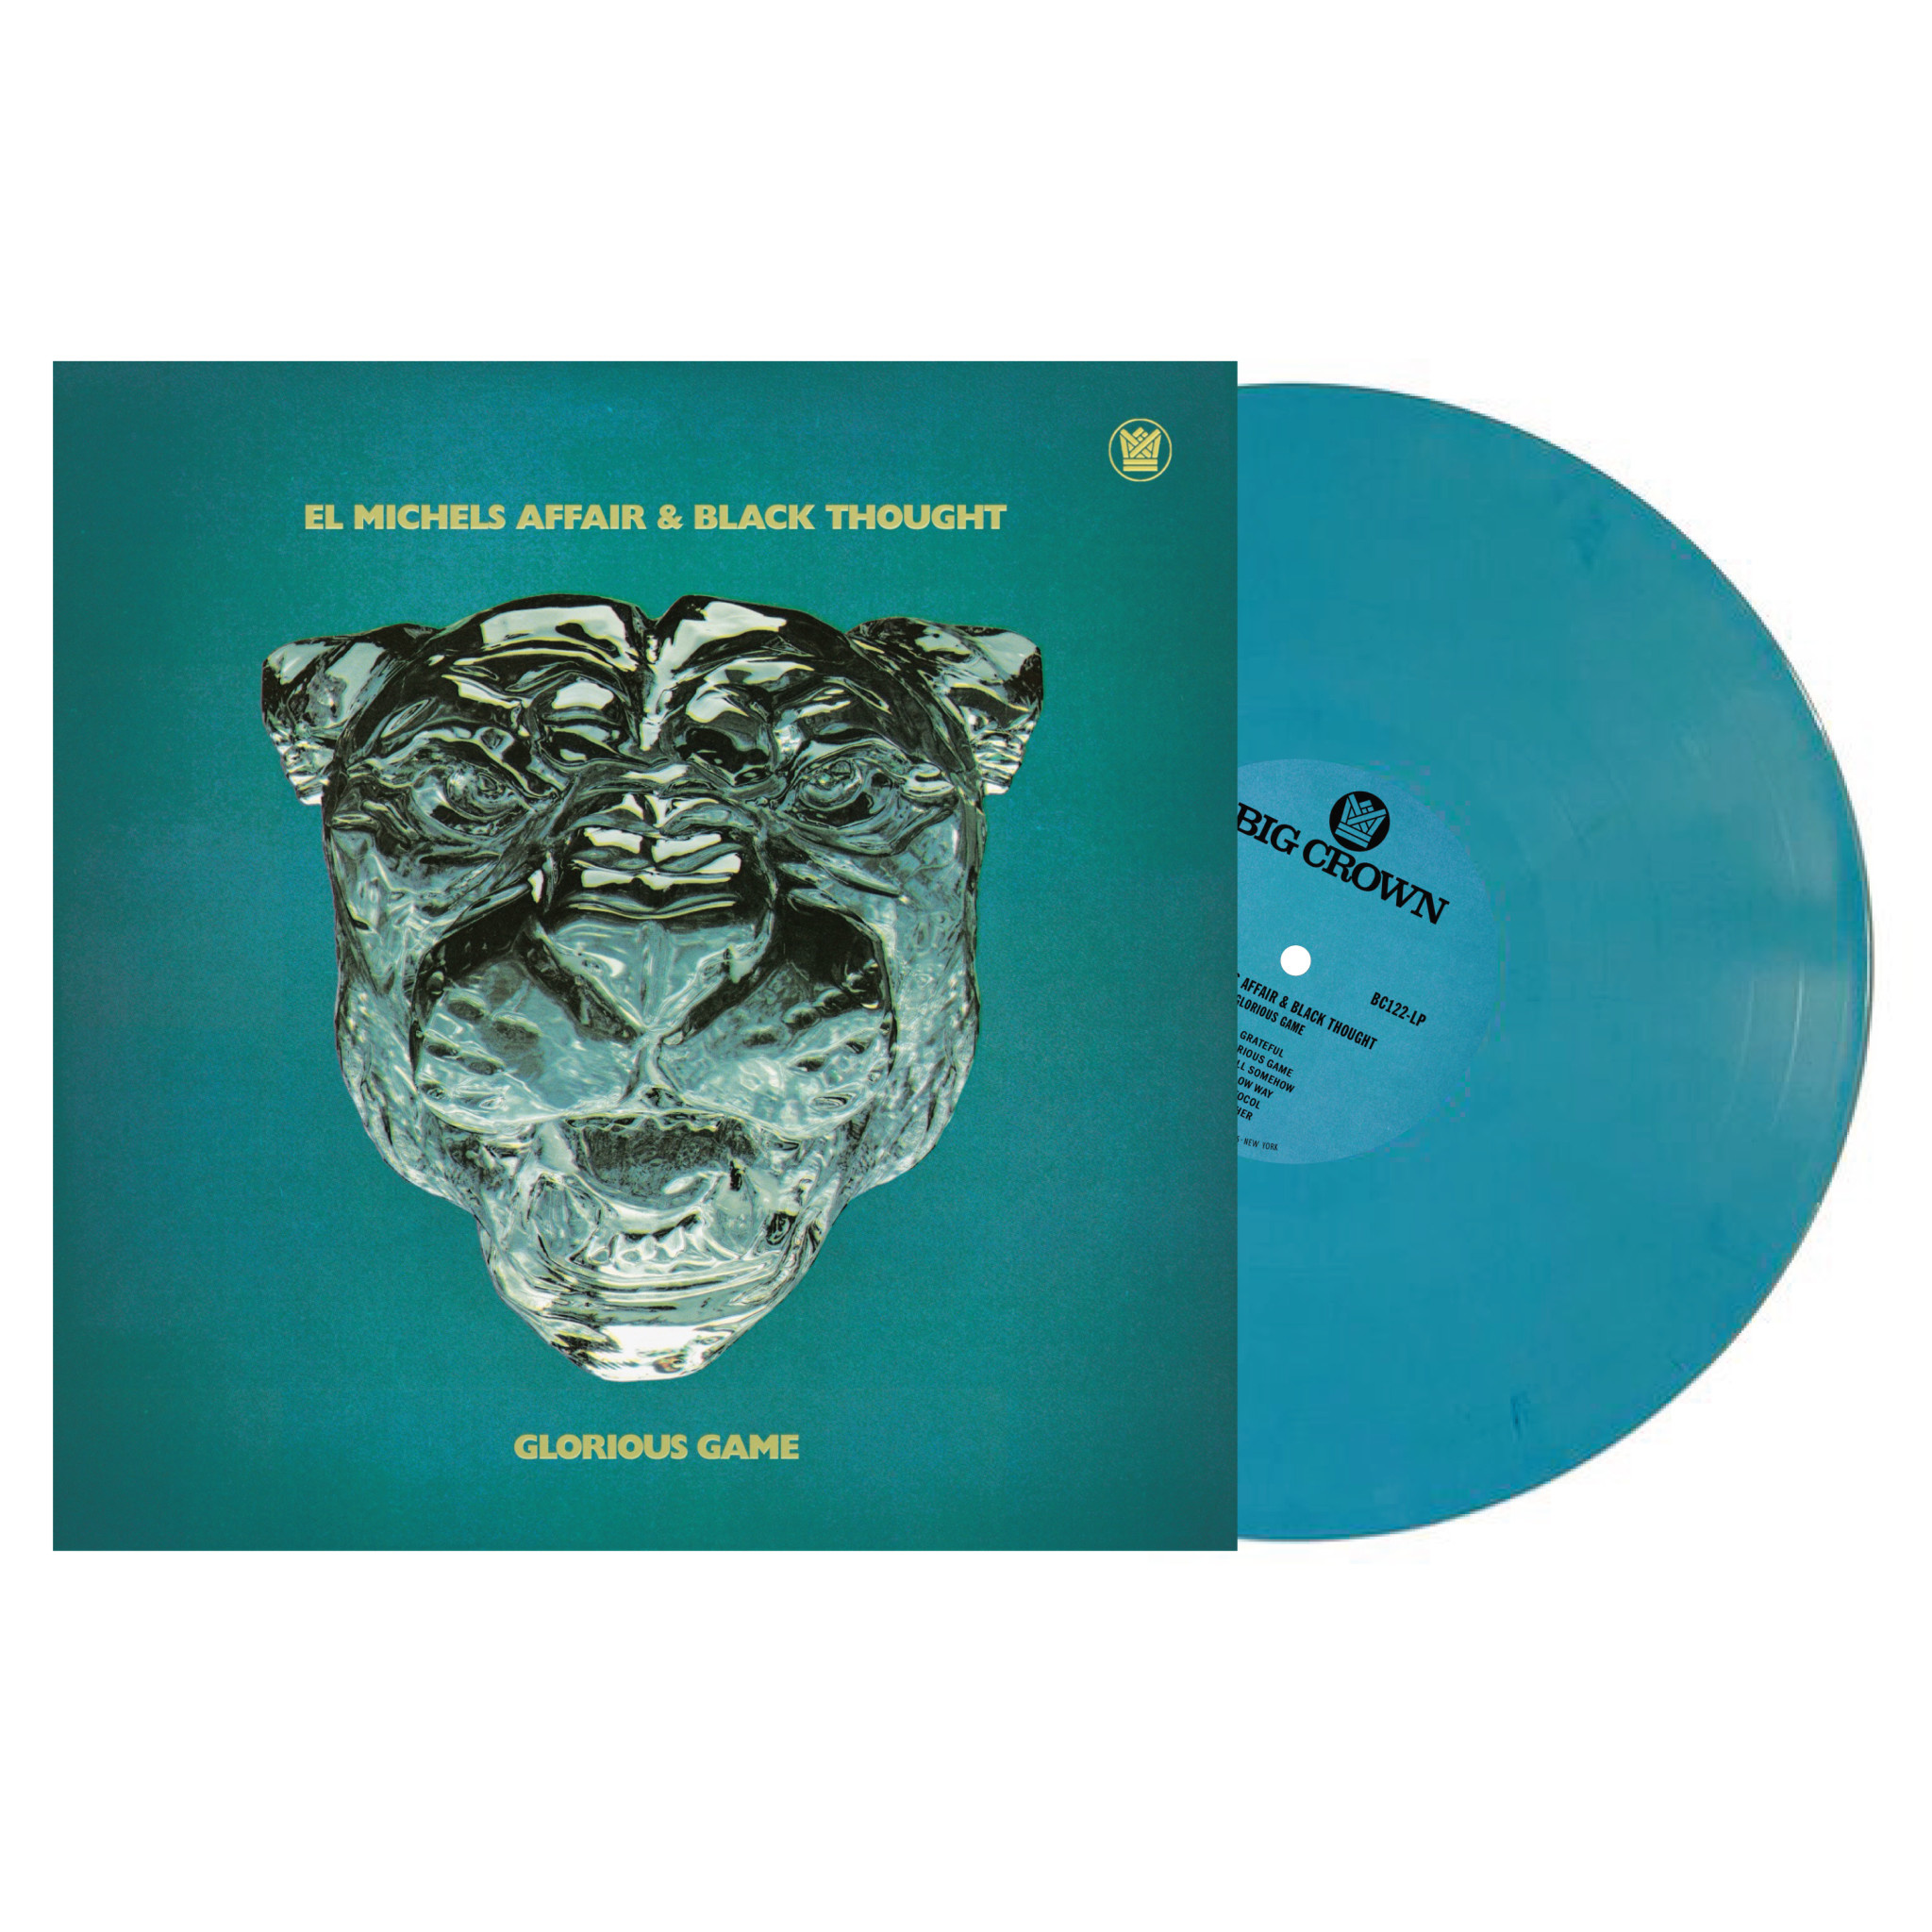 Big Crown Records El Michels Affair & Black Thought - Glorious Game (Blue Vinyl)